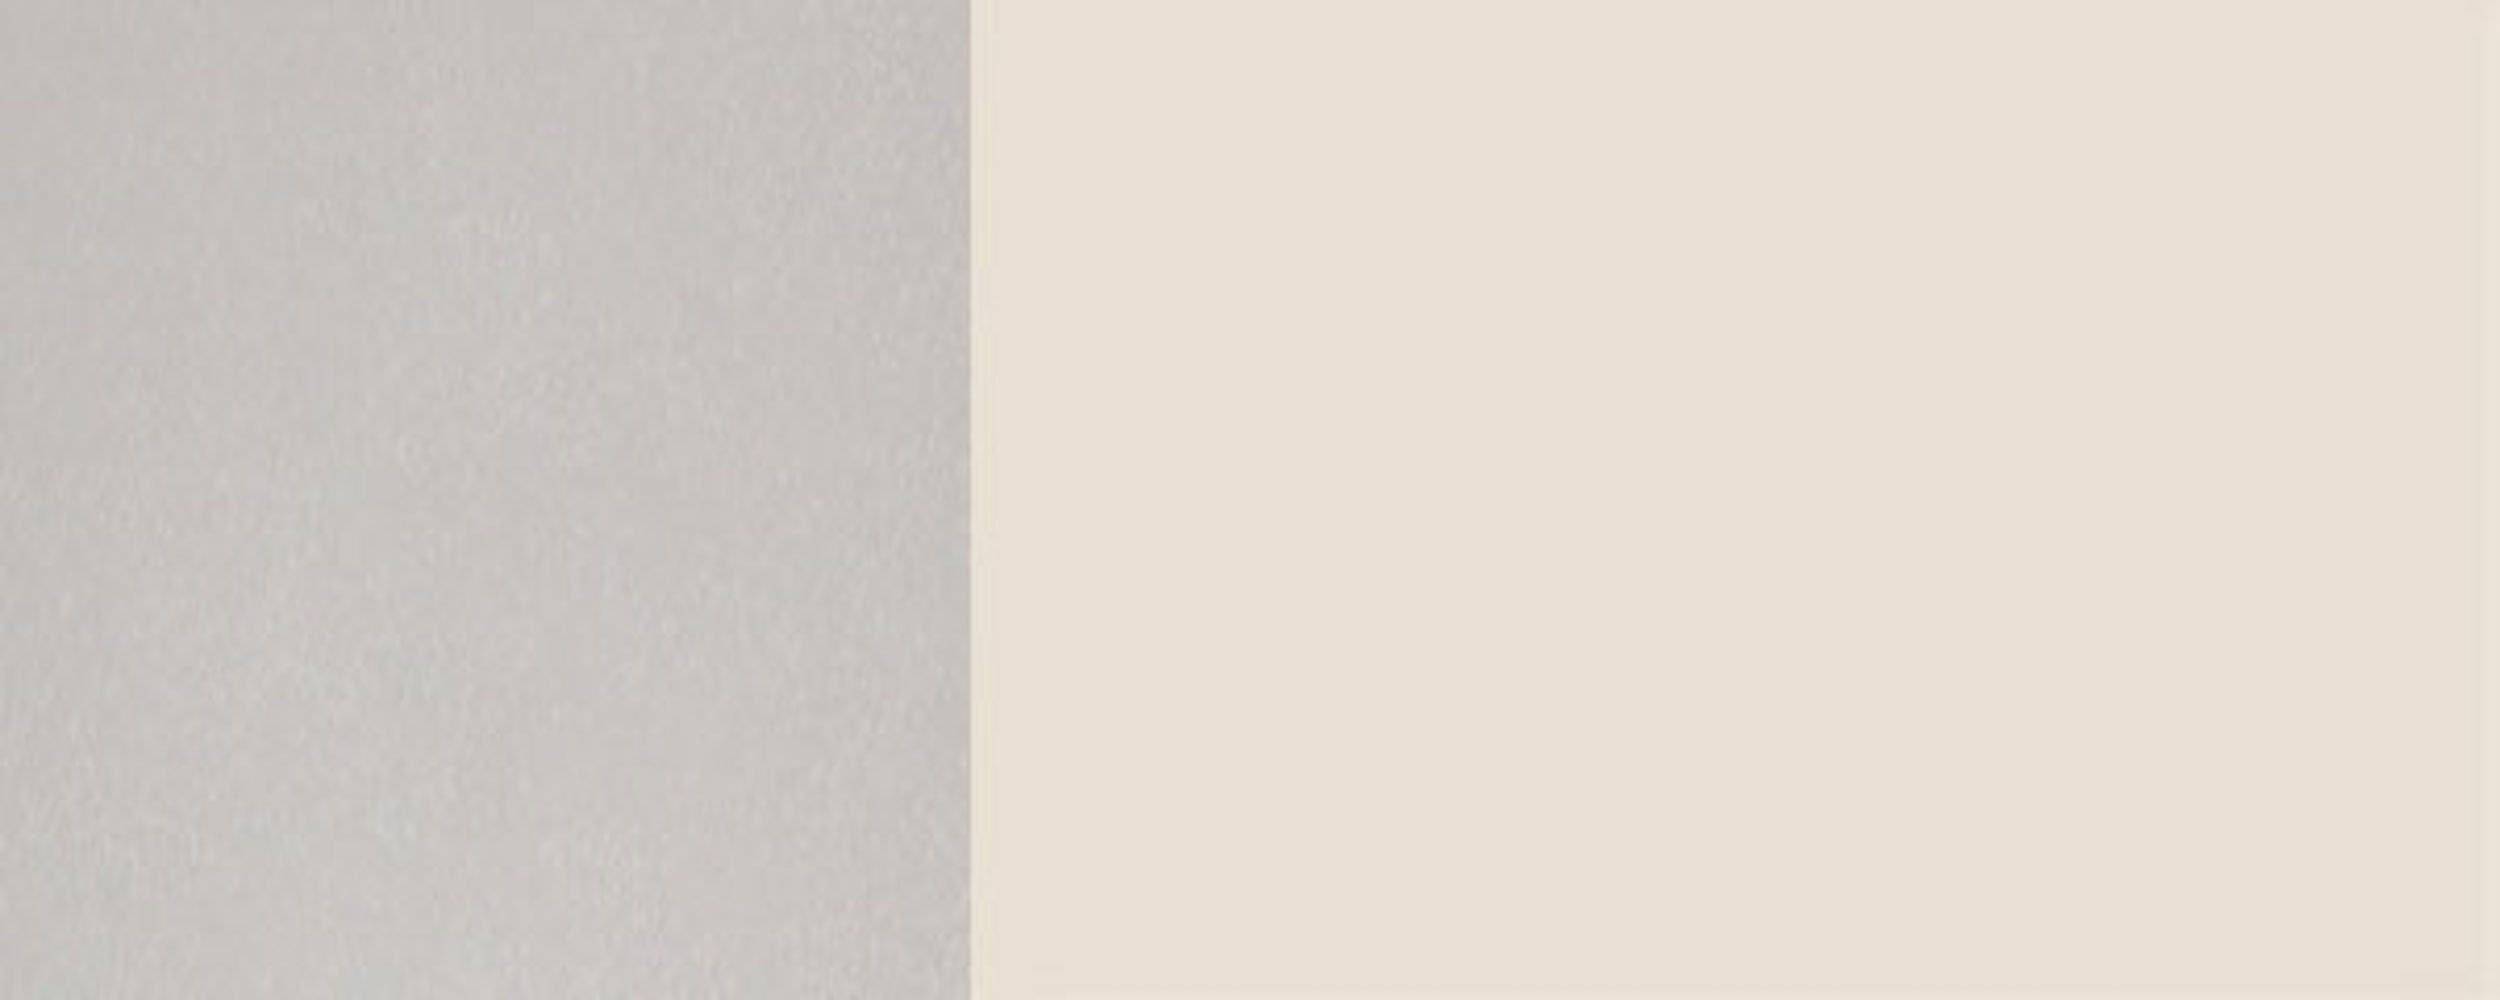 Kühlumbauschrank Florence Korpusfarbe Feldmann-Wohnen Front-, und wählbar 9001 RAL grifflos Ausführung 60cm (Florence) cremeweiß 2-türig Hochglanz